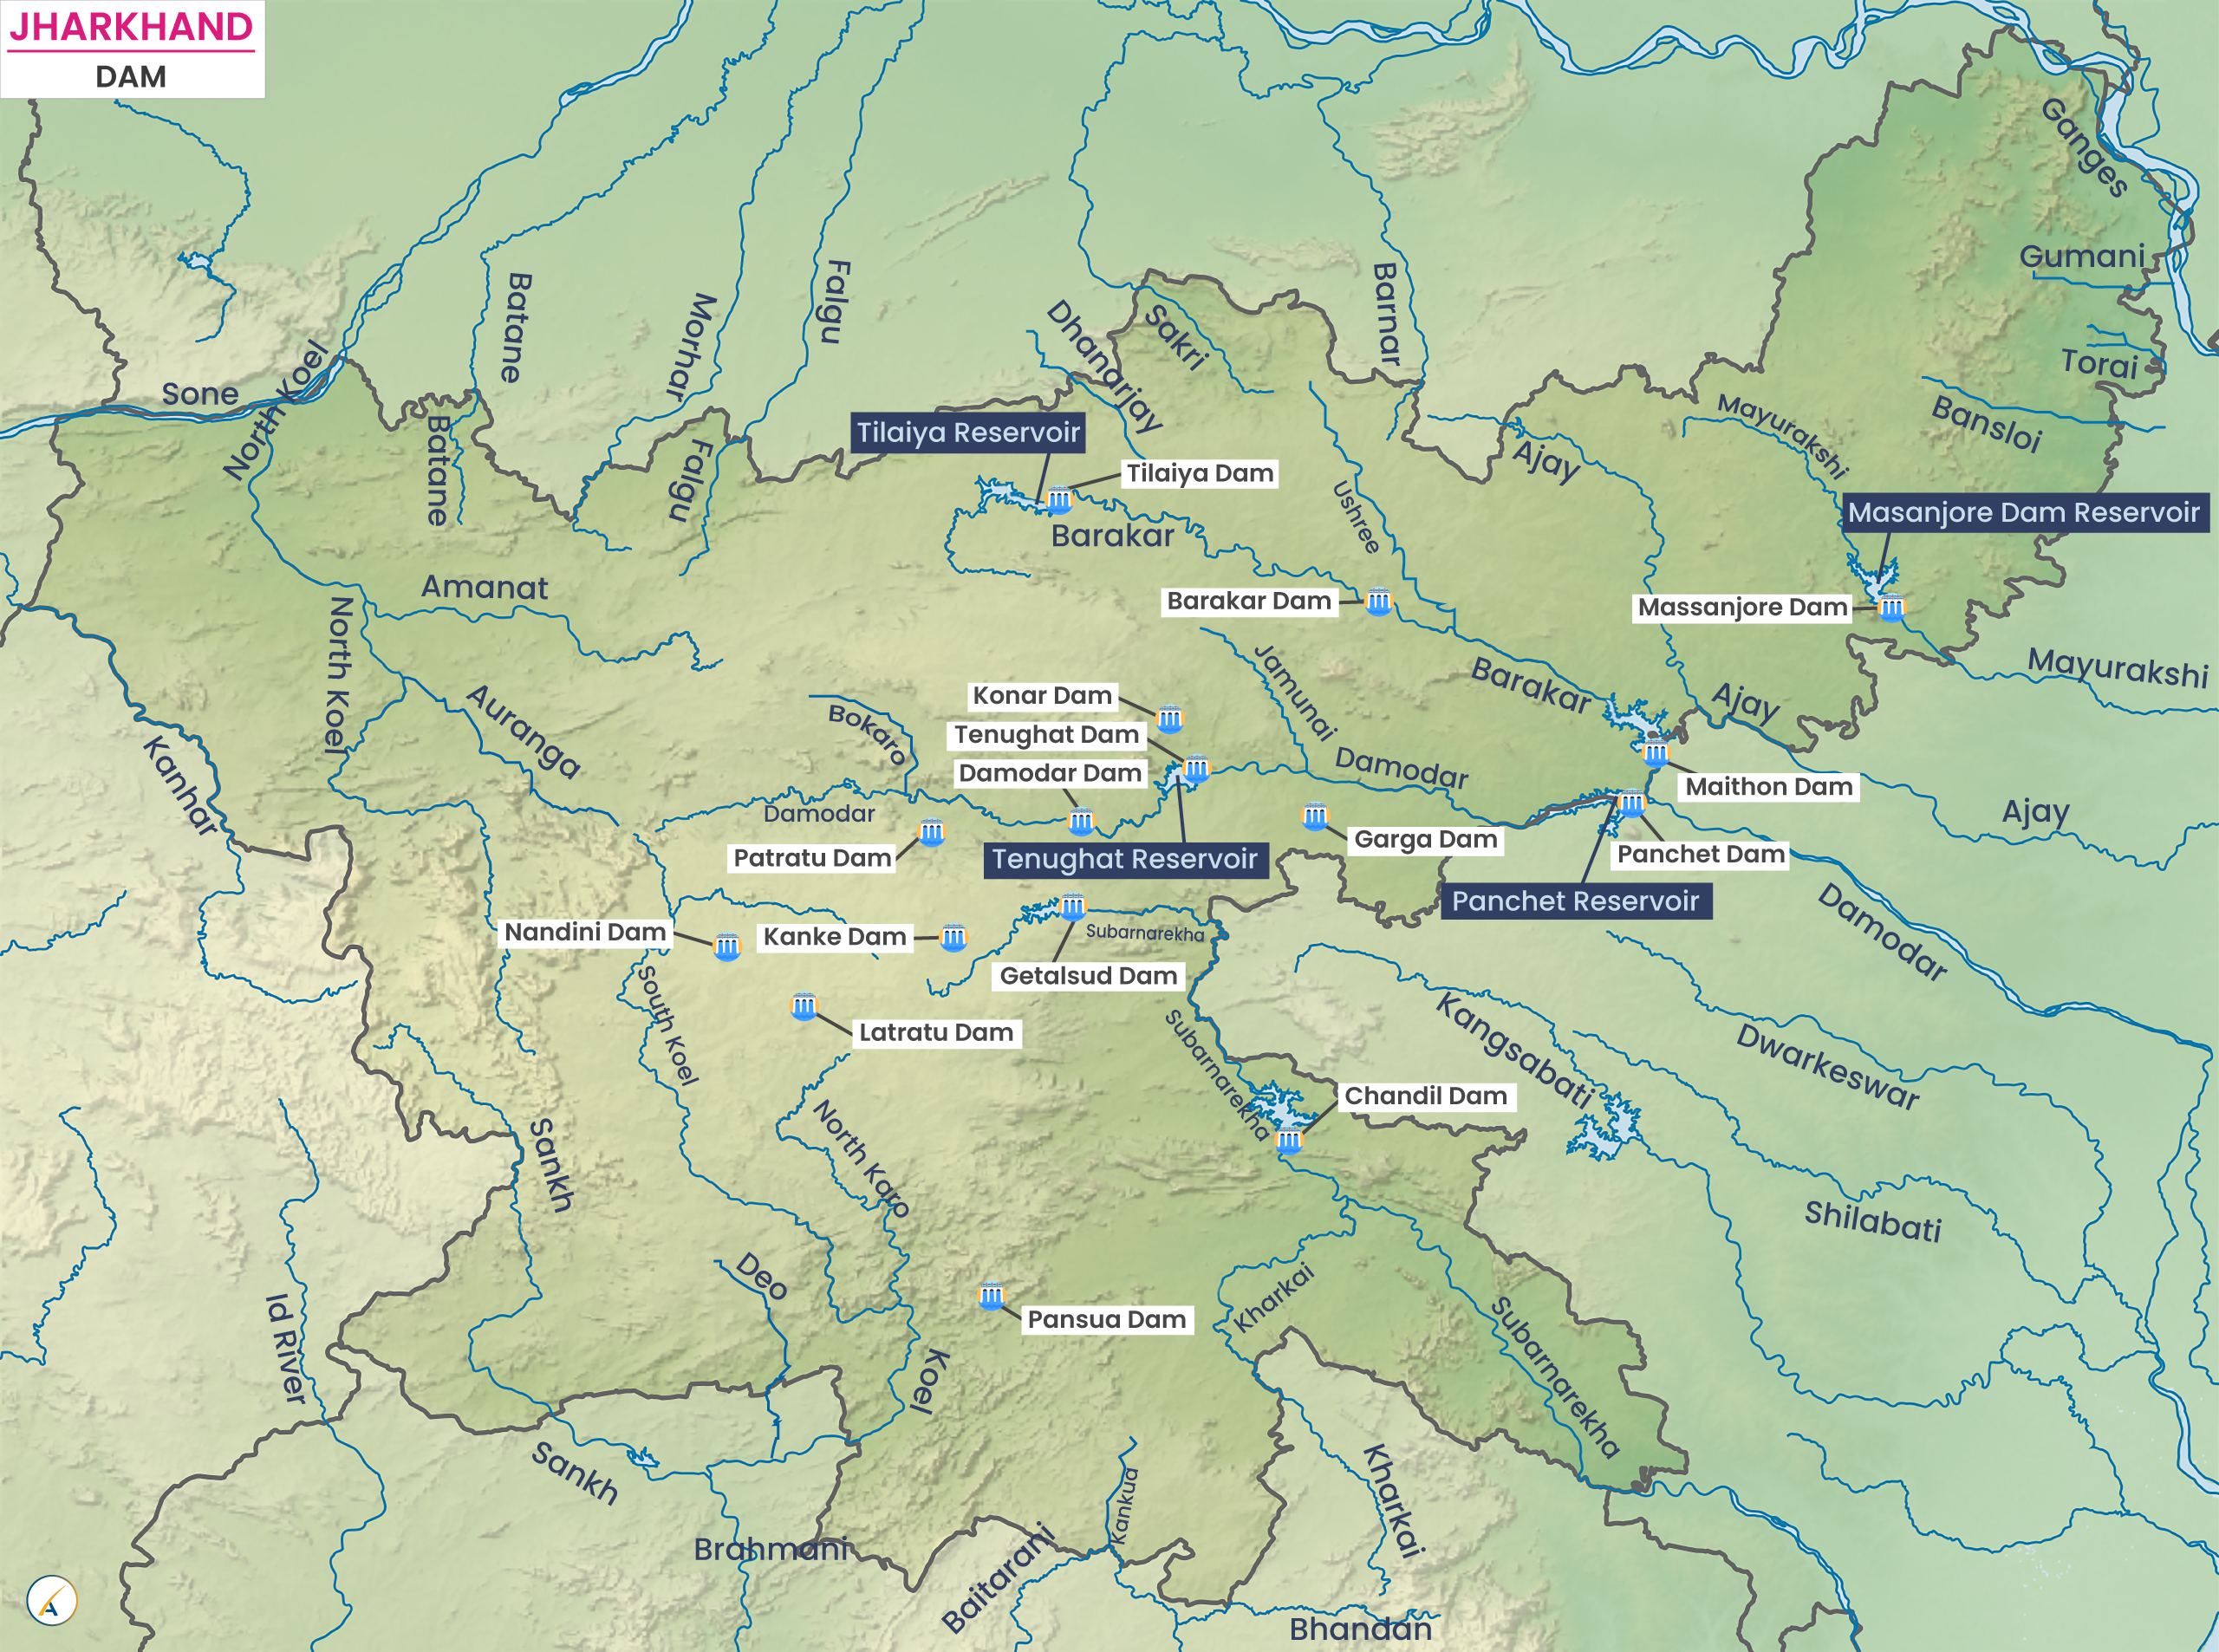 Major Dams in Jharkhand (Map)